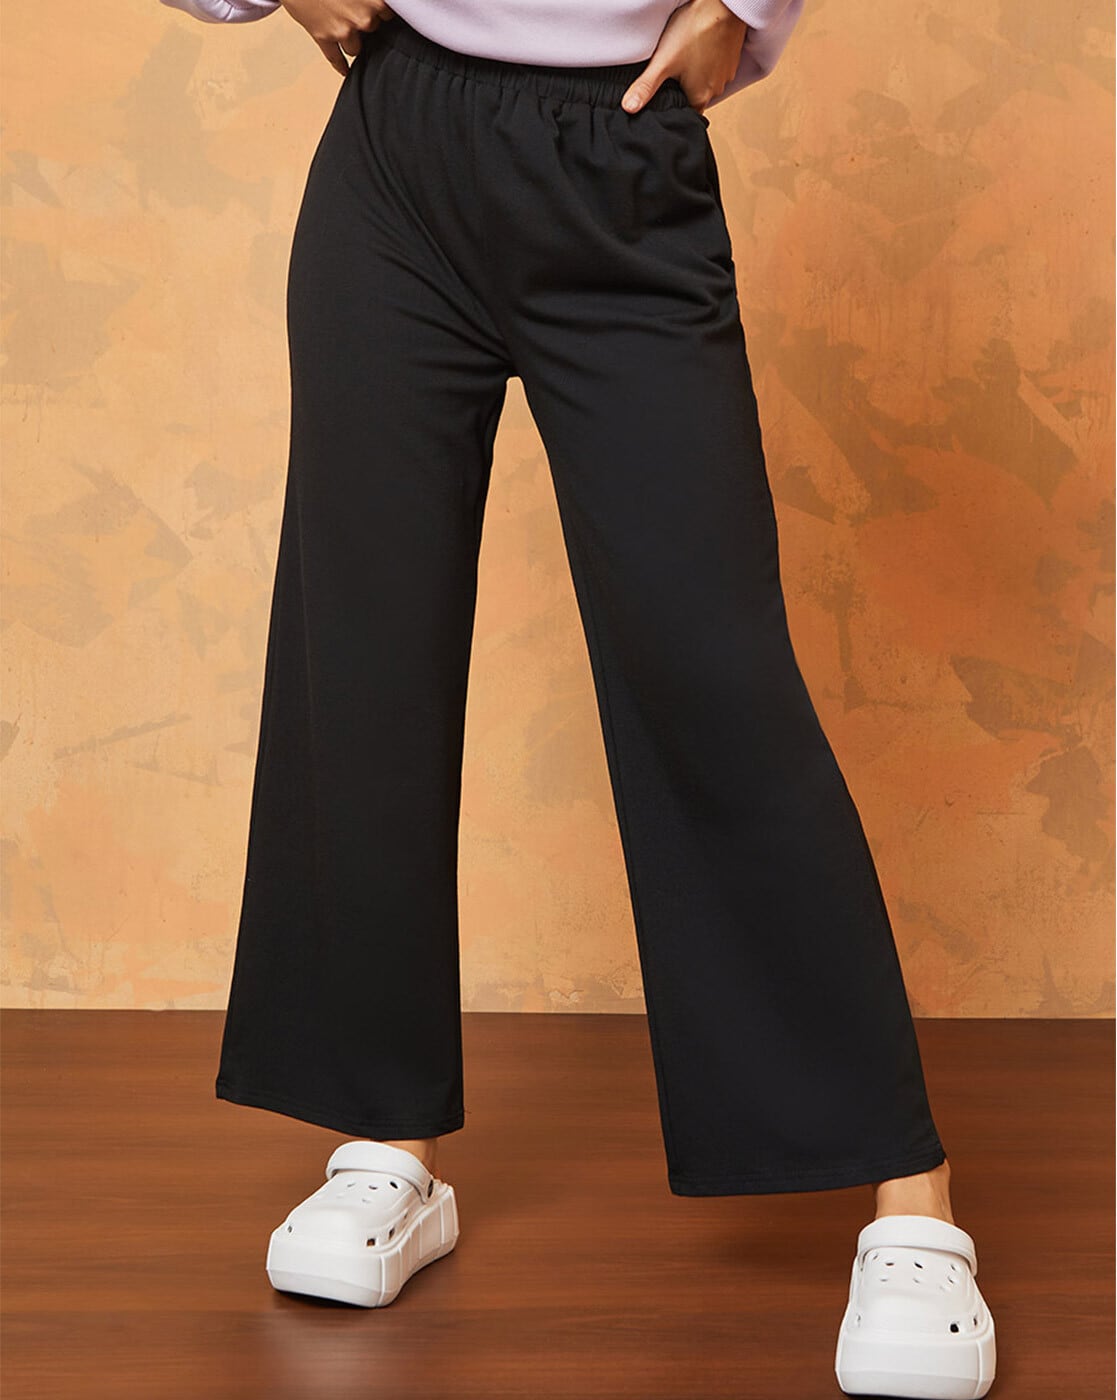 Buy Women Black Regular Fit Solid Casual Trousers Online  808087  Allen  Solly